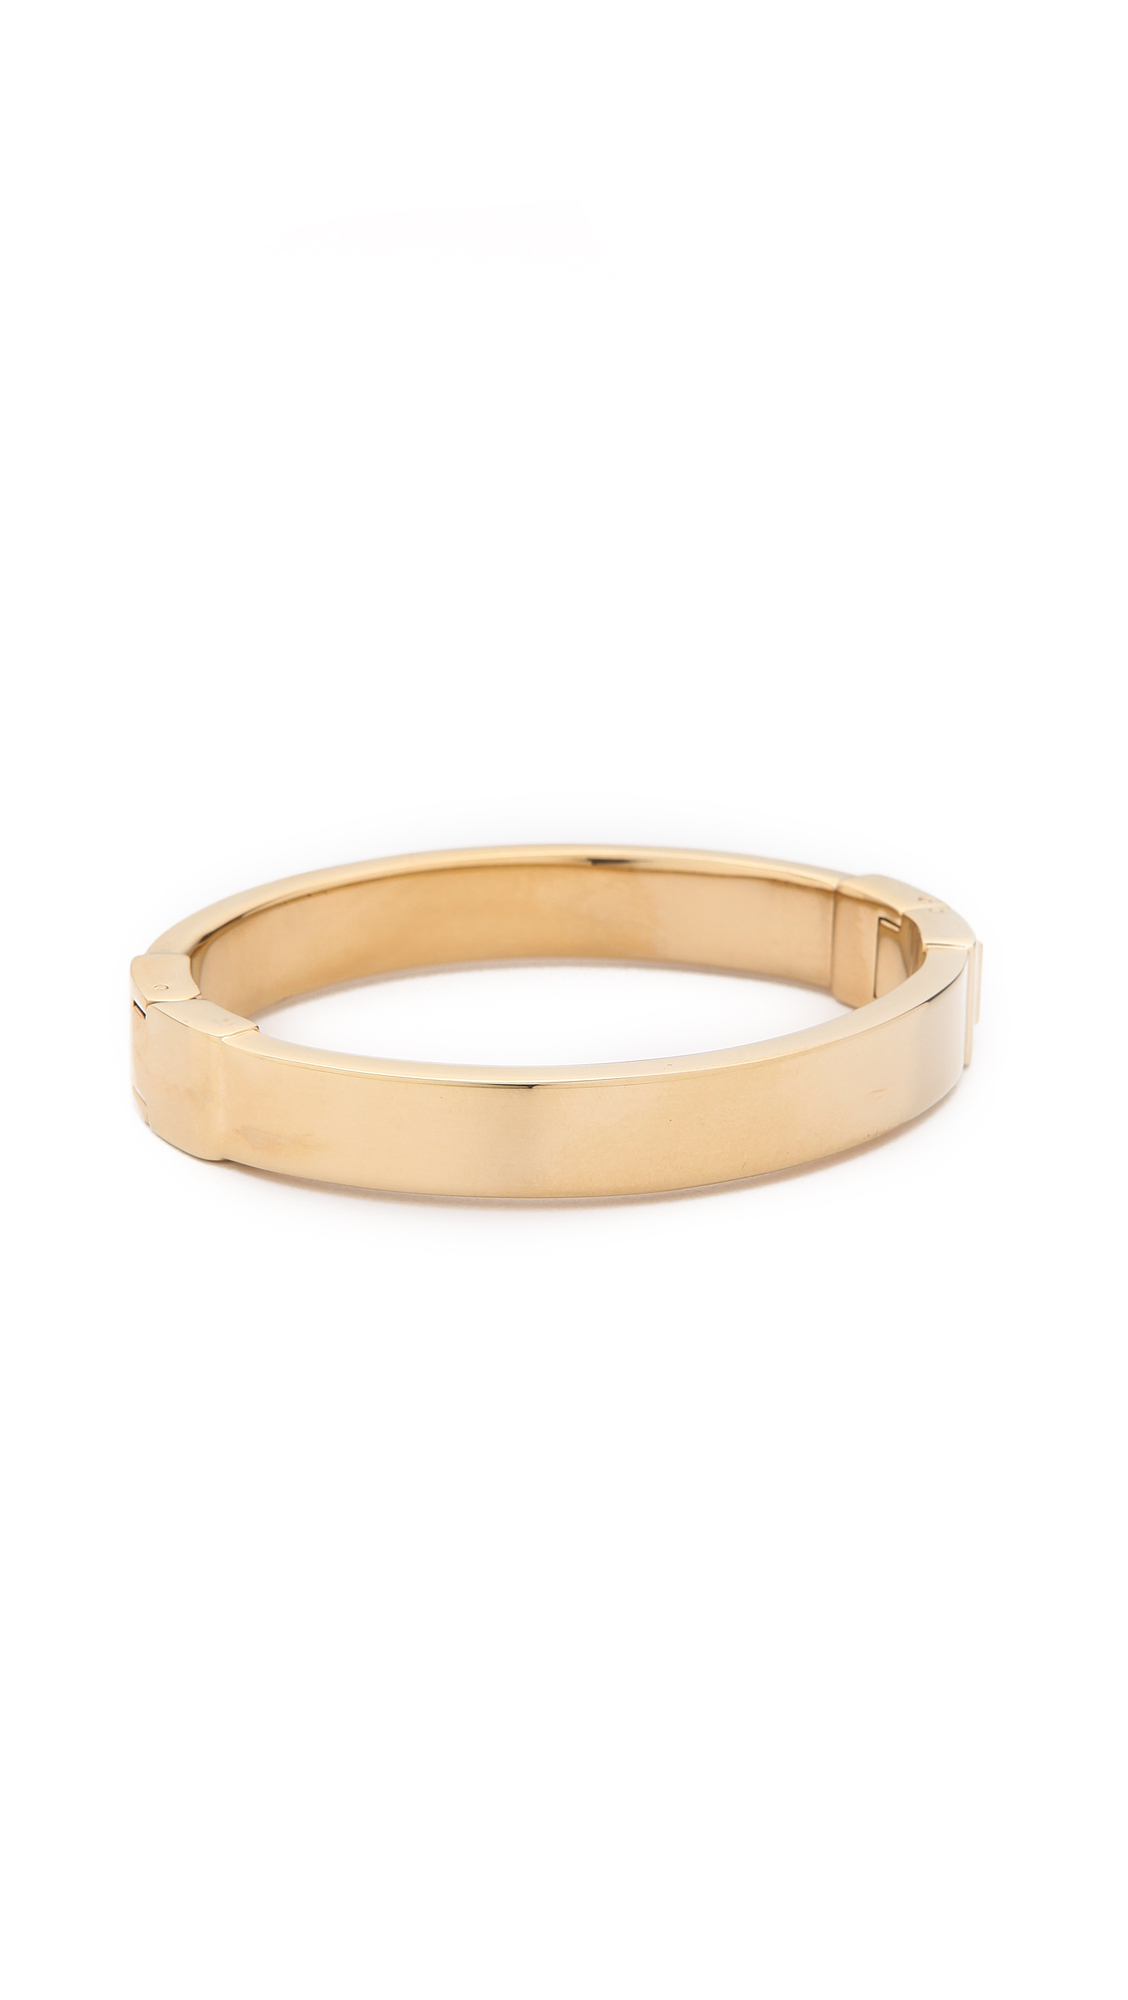 Michael Kors Hinged Bangle Bracelet - Gold in Metallic - Lyst